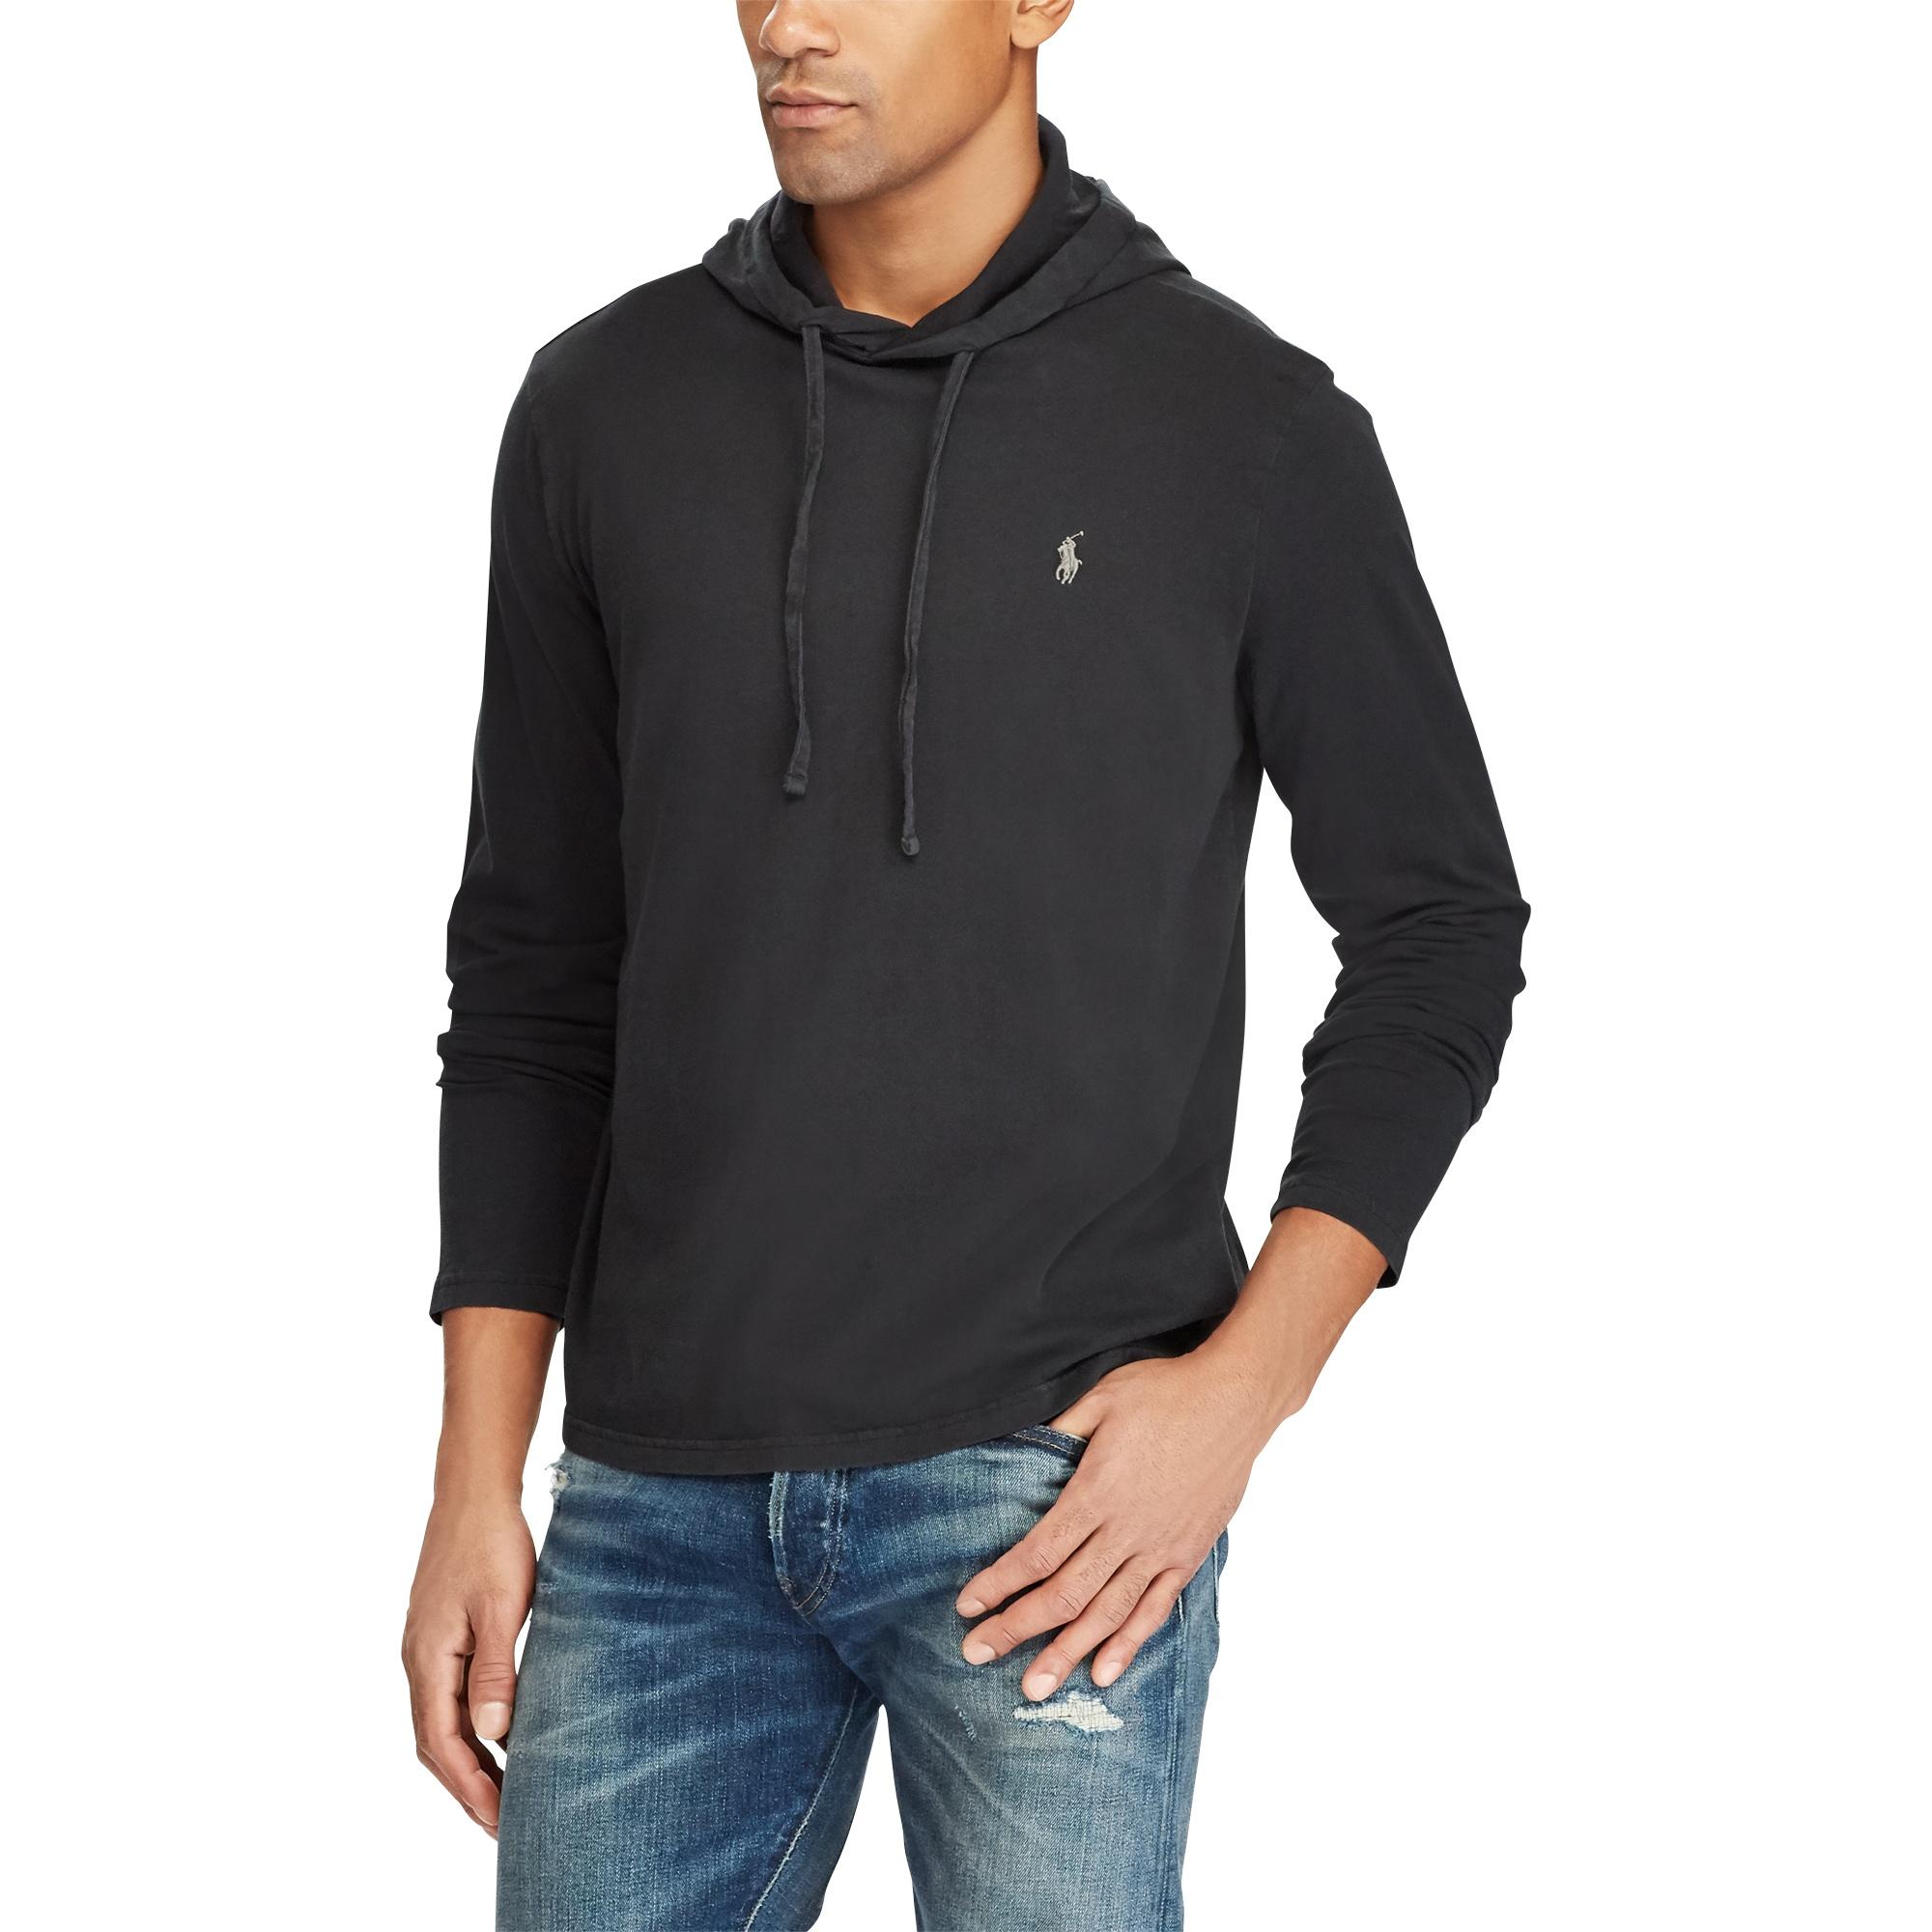 Ralph Lauren Cotton Jersey Hooded T-shirt in Black for Men - Lyst